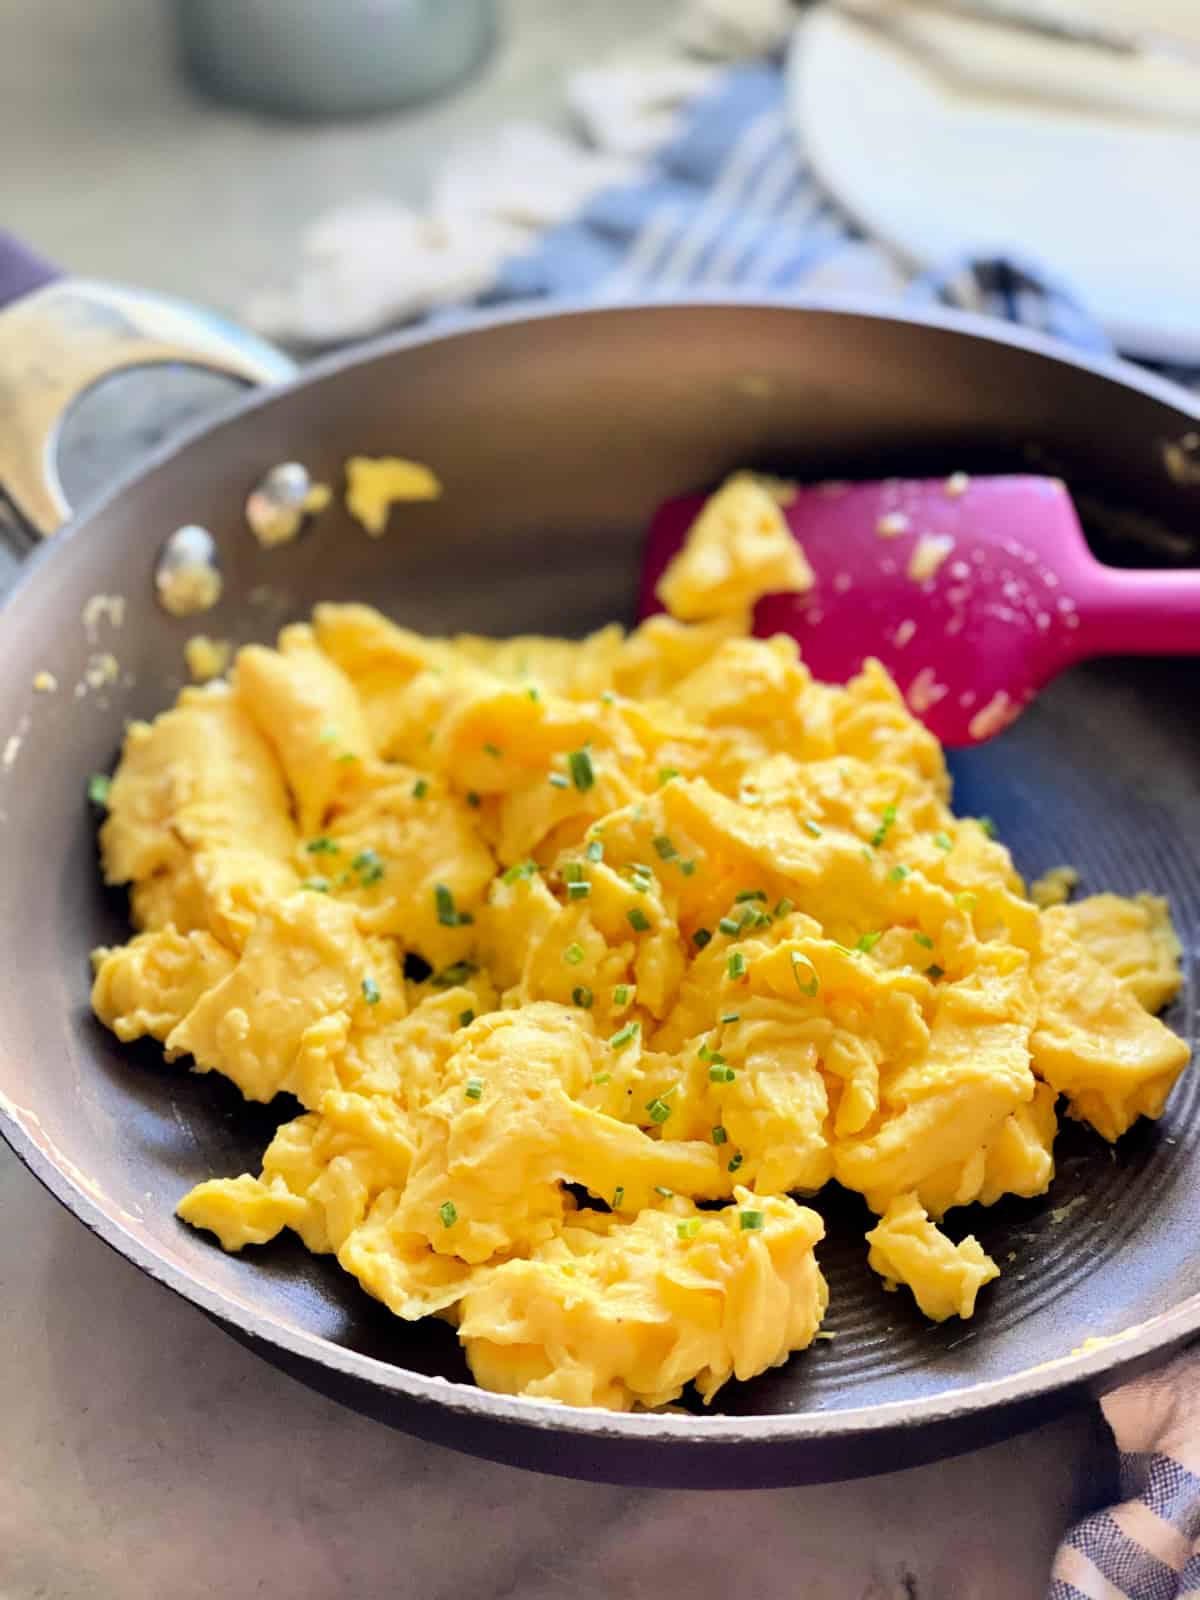 https://www.katiescucina.com/wp-content/uploads/2022/01/How-to-Make-Scrambled-Eggs.jpg